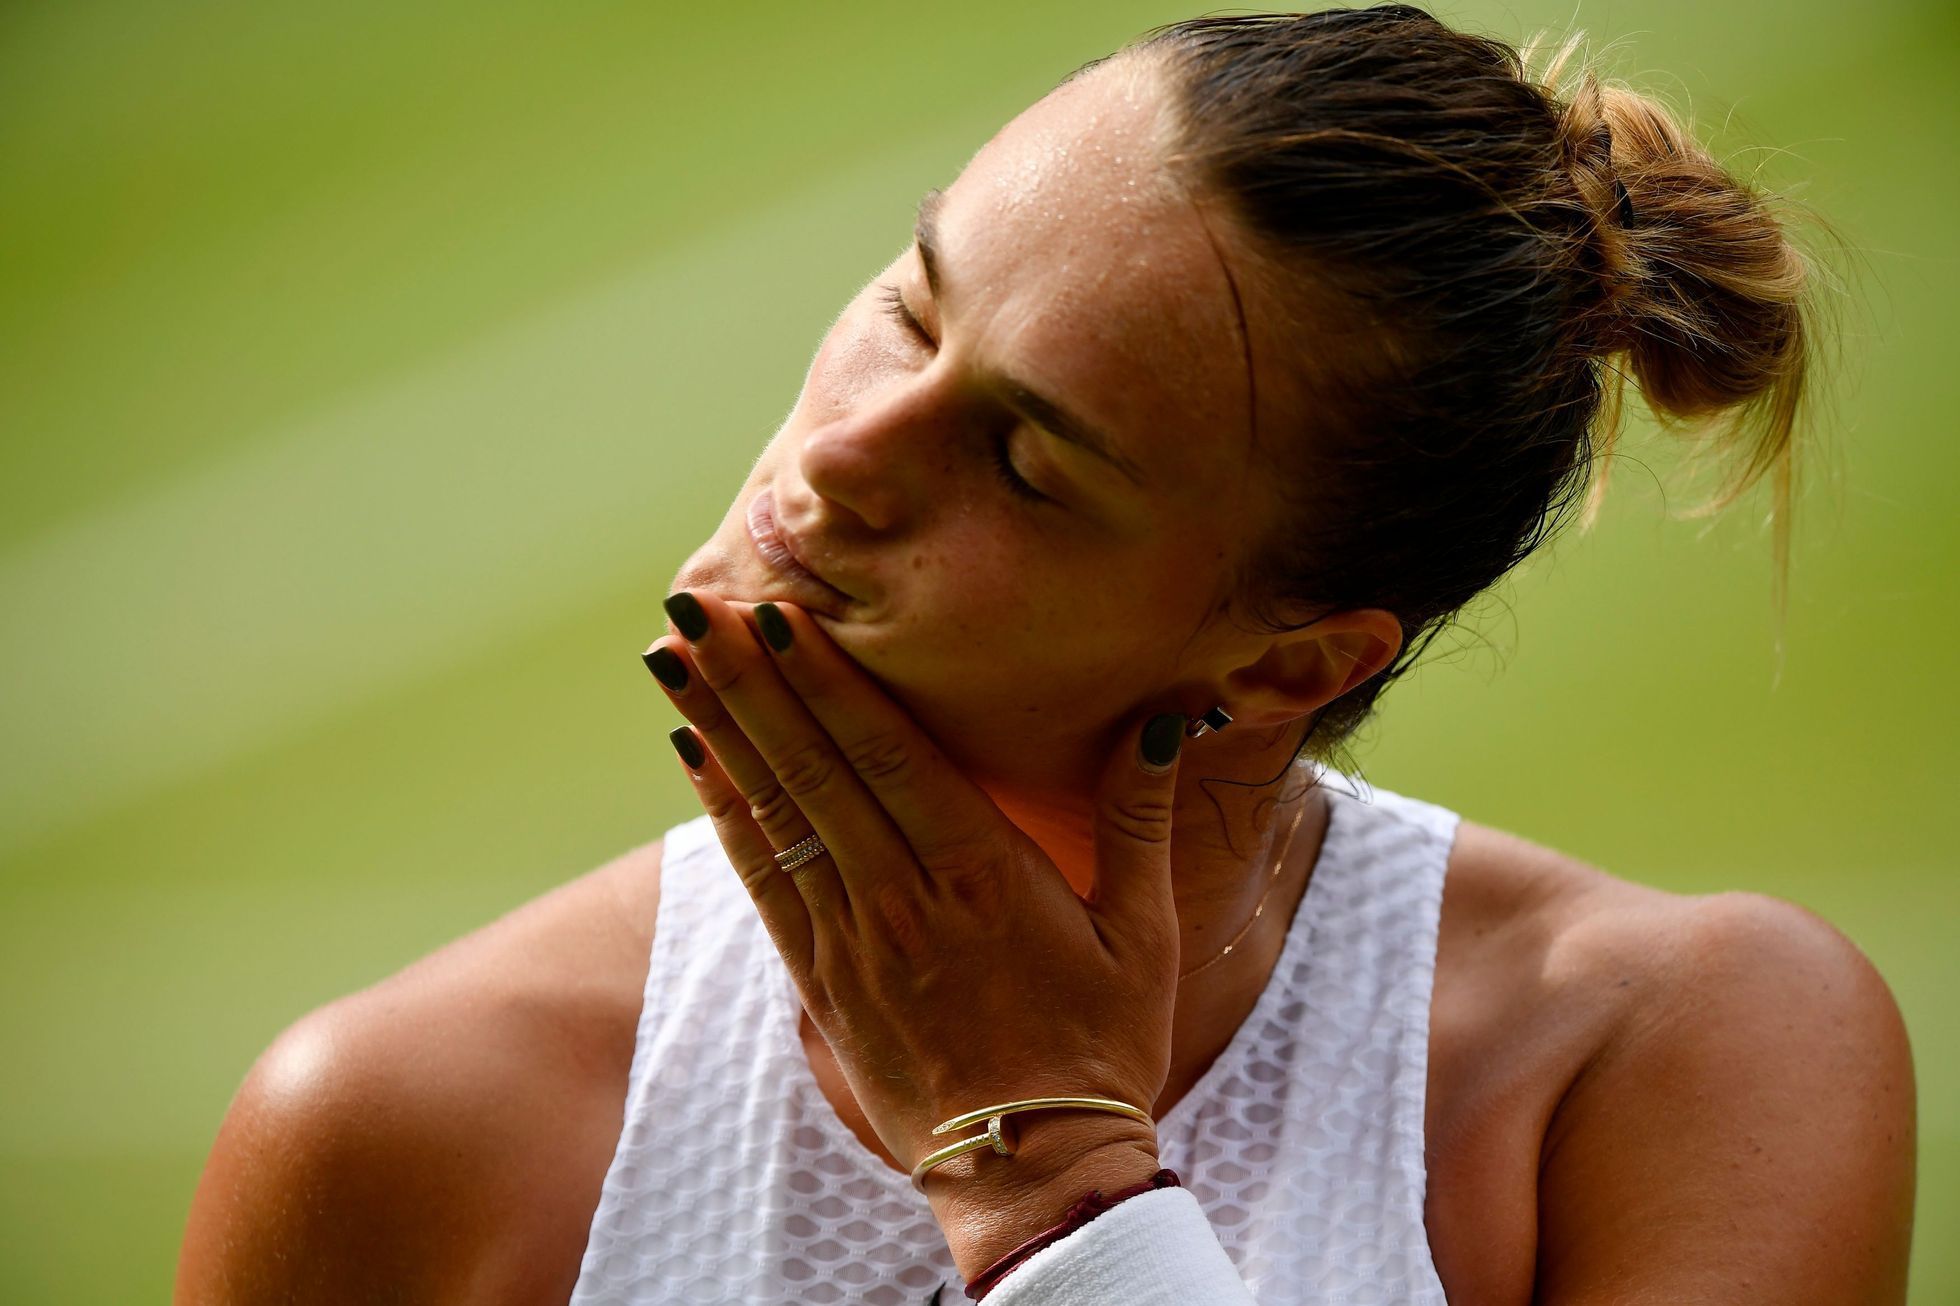 Karolína Plíšková vs. Aryna Sabalenková, semifinále Wimbledon 2021